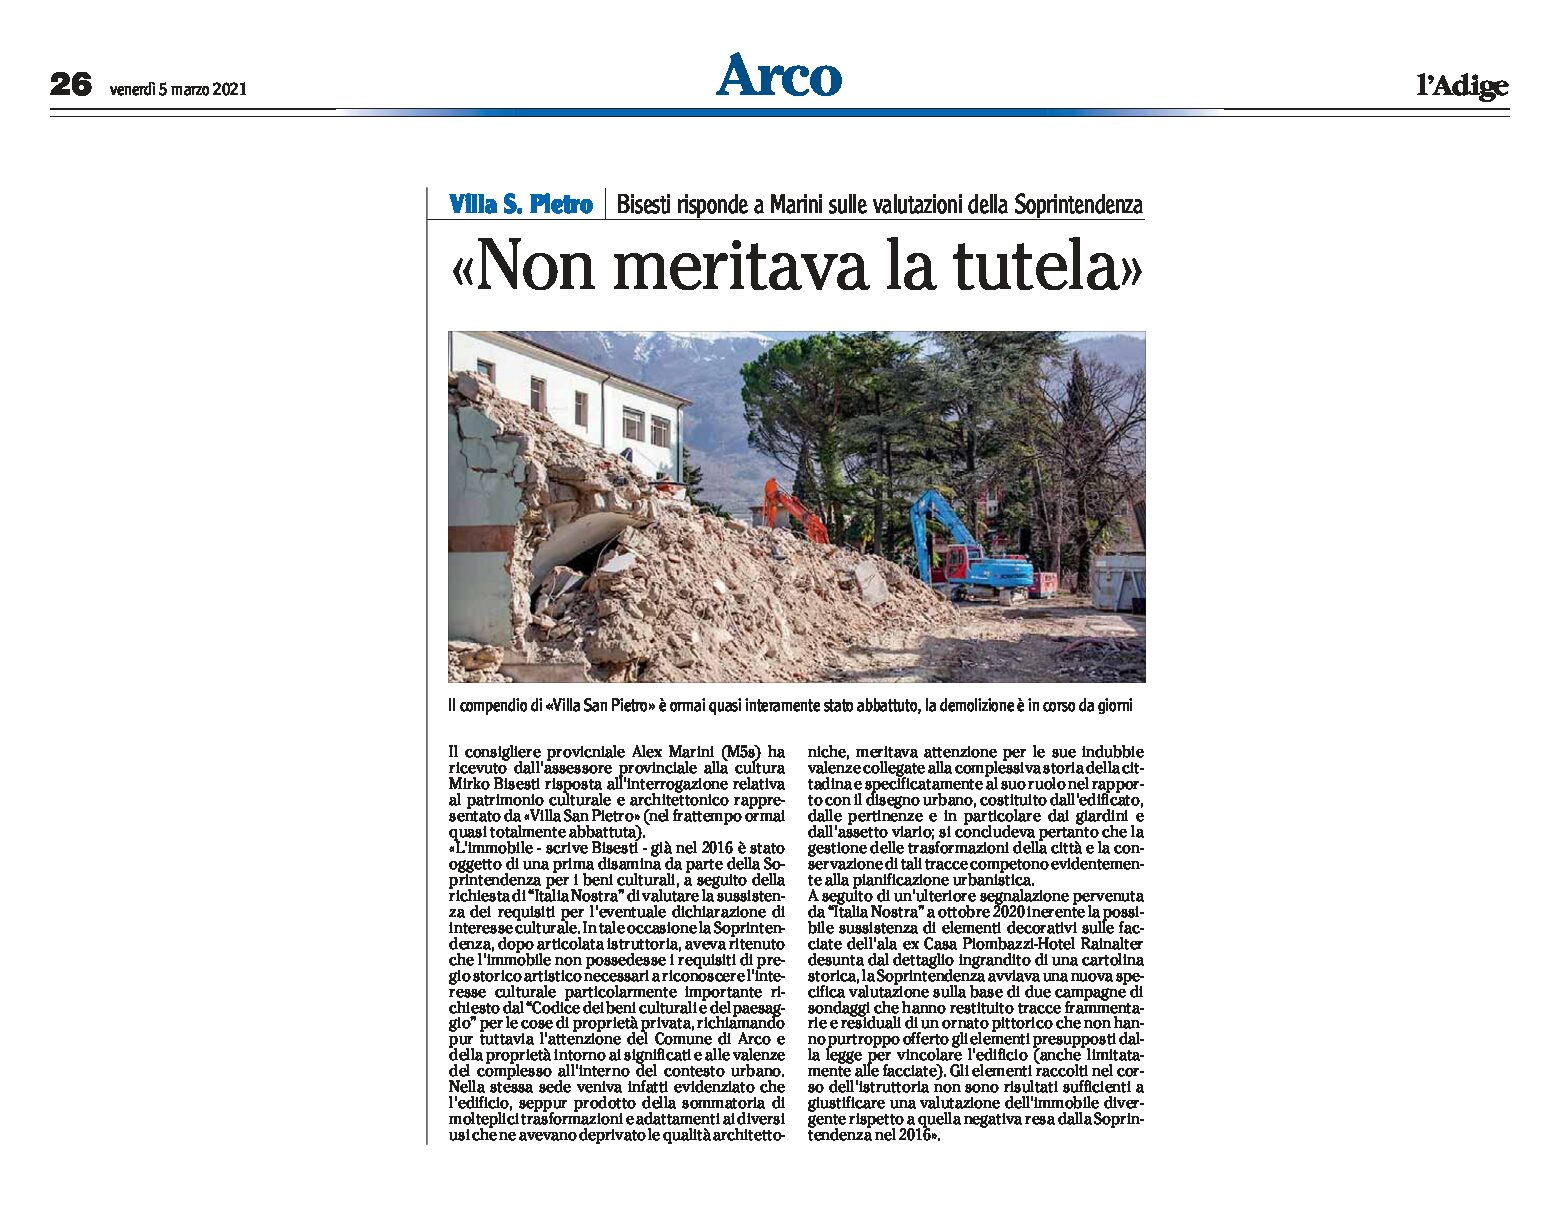 Arco: Bisesti risponde a Marini “villa San Pietro non meritava la tutela”